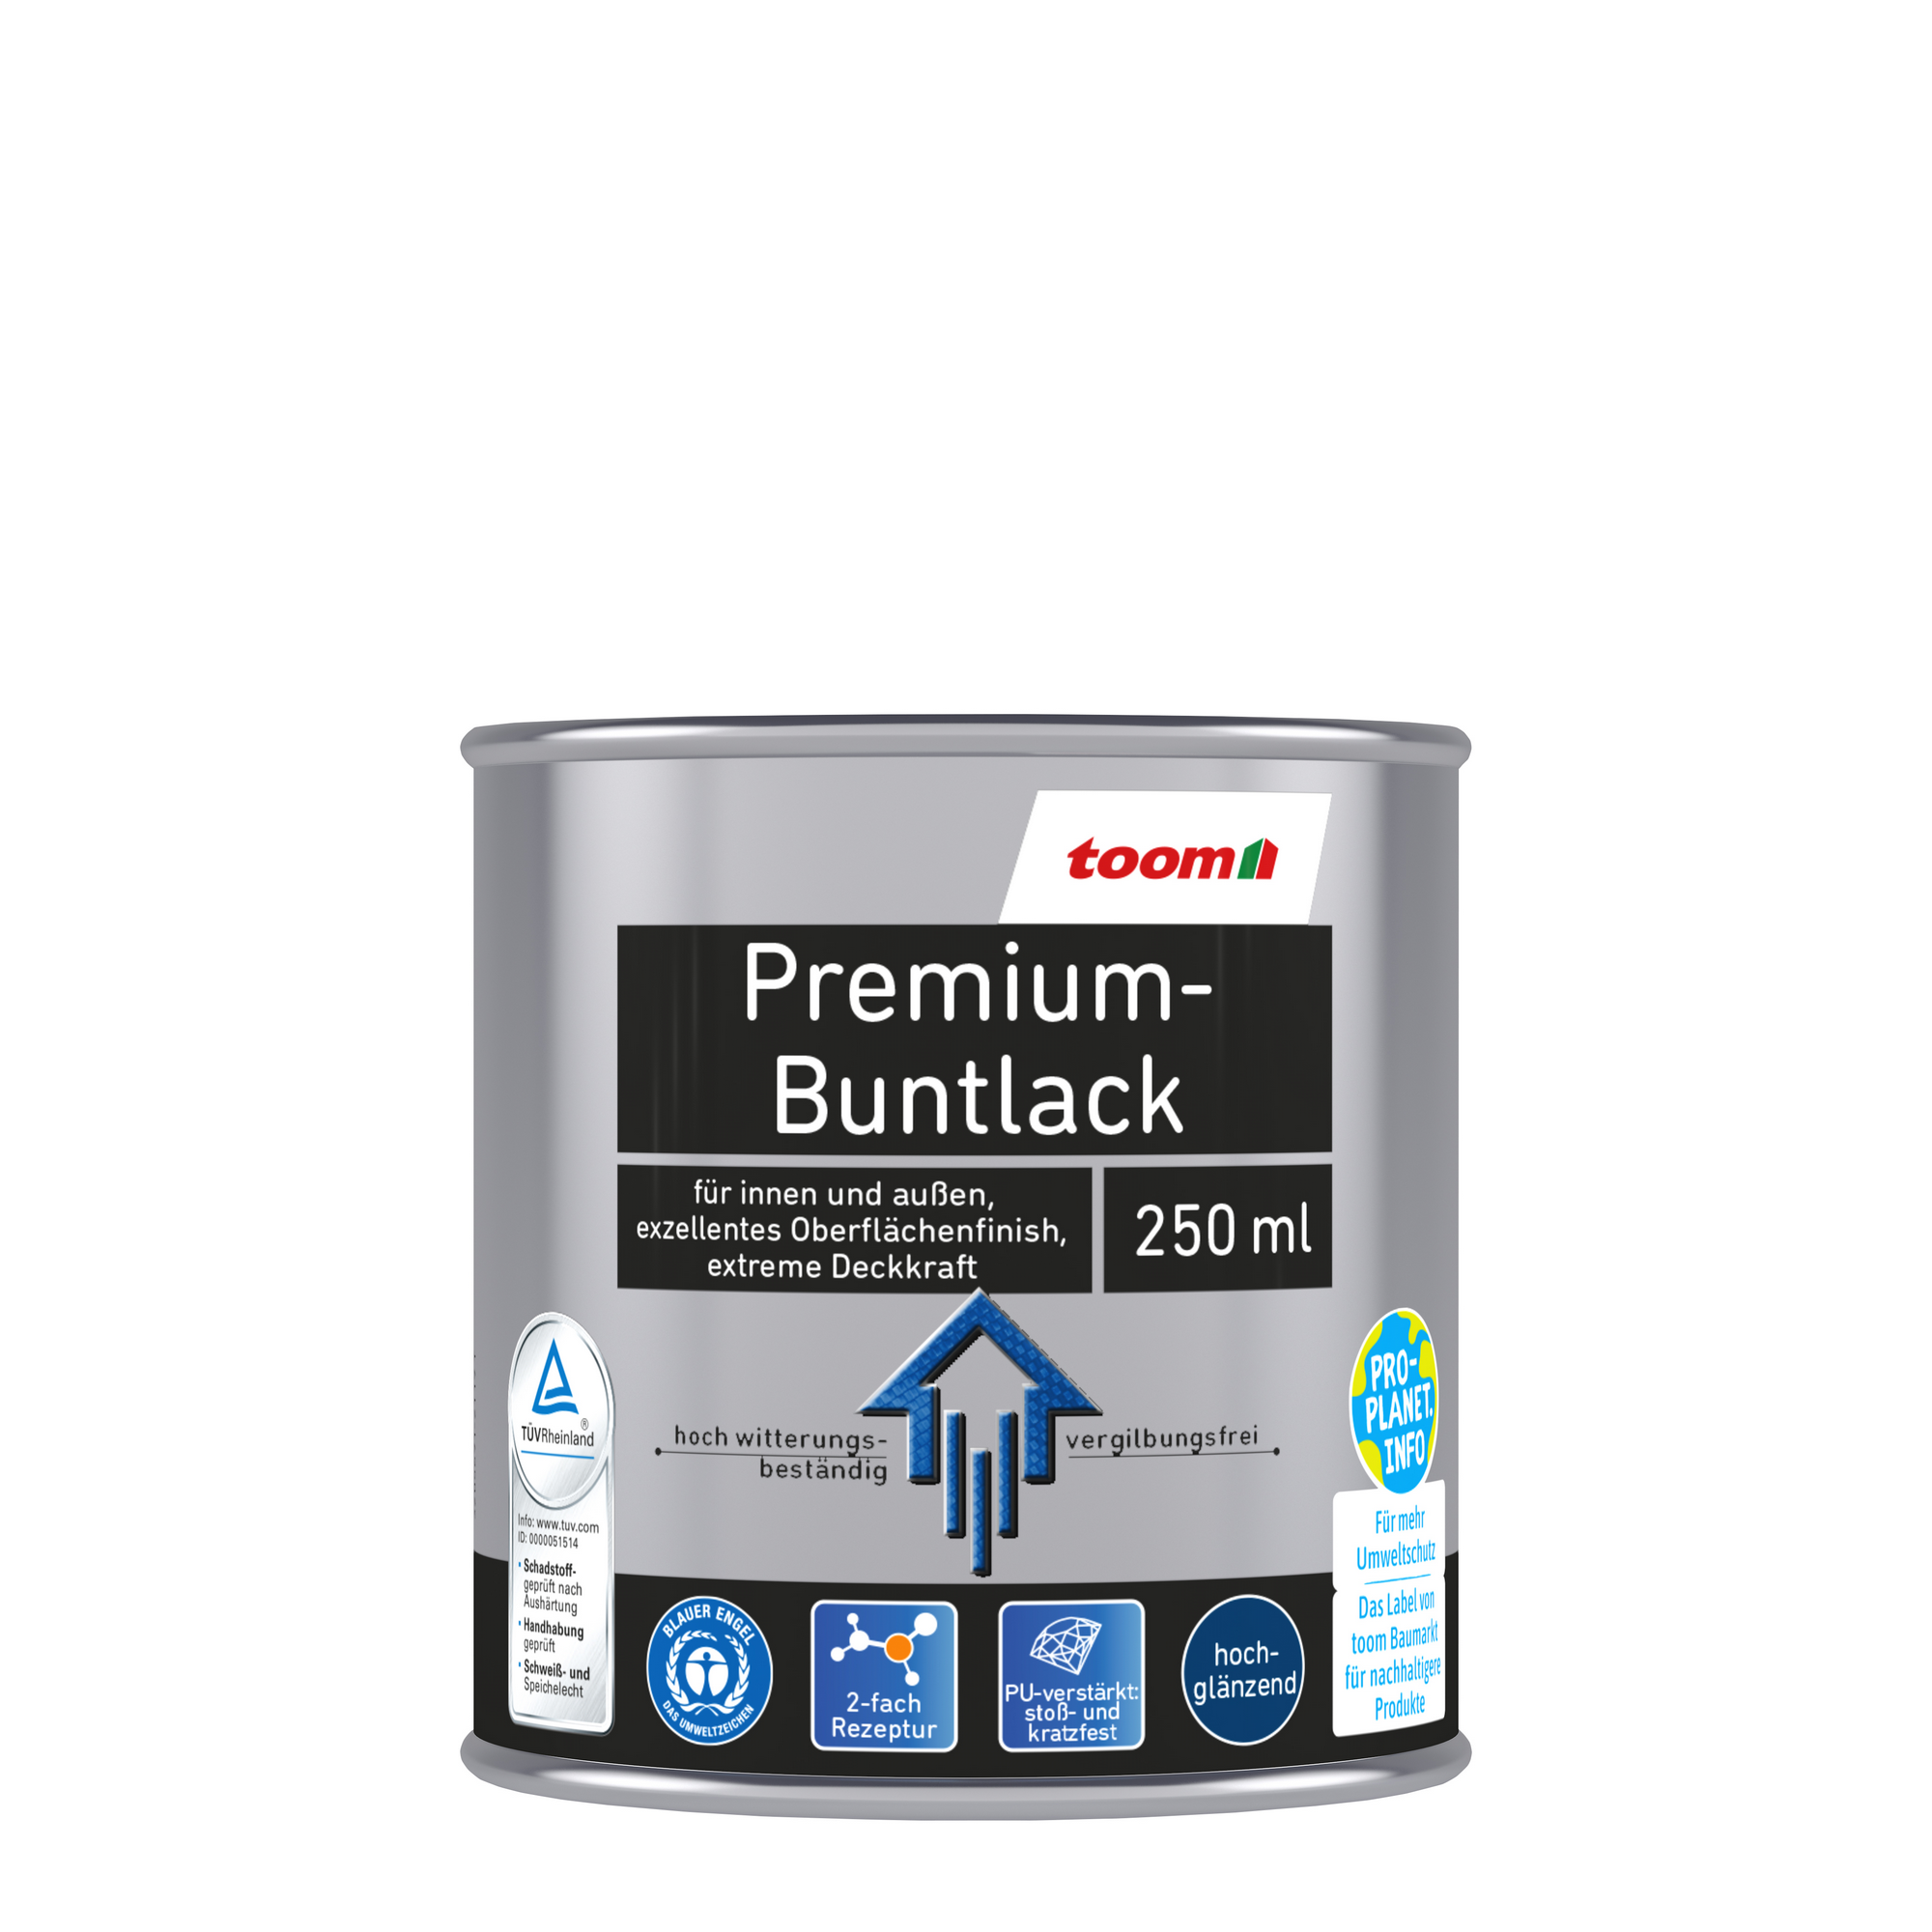 toom Premium-Buntlack nussbraun glänzend 250 ml